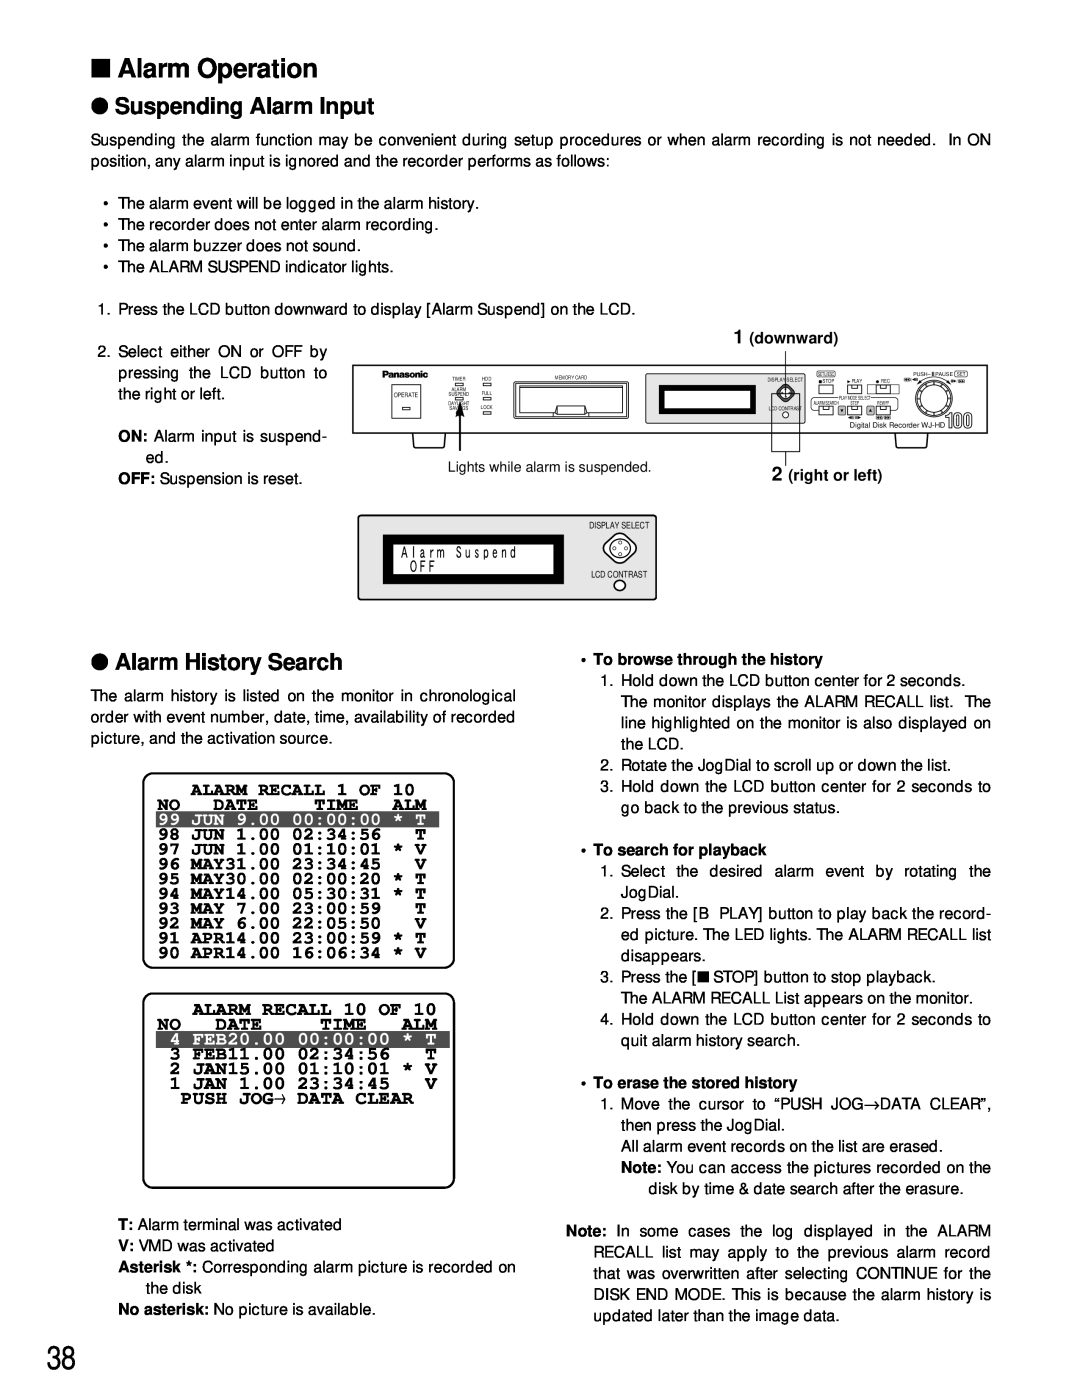 Panasonic WJ-HD100 operating instructions Alarm Operation, Suspending Alarm Input, Alarm History Search, Jun, FEB20.00 